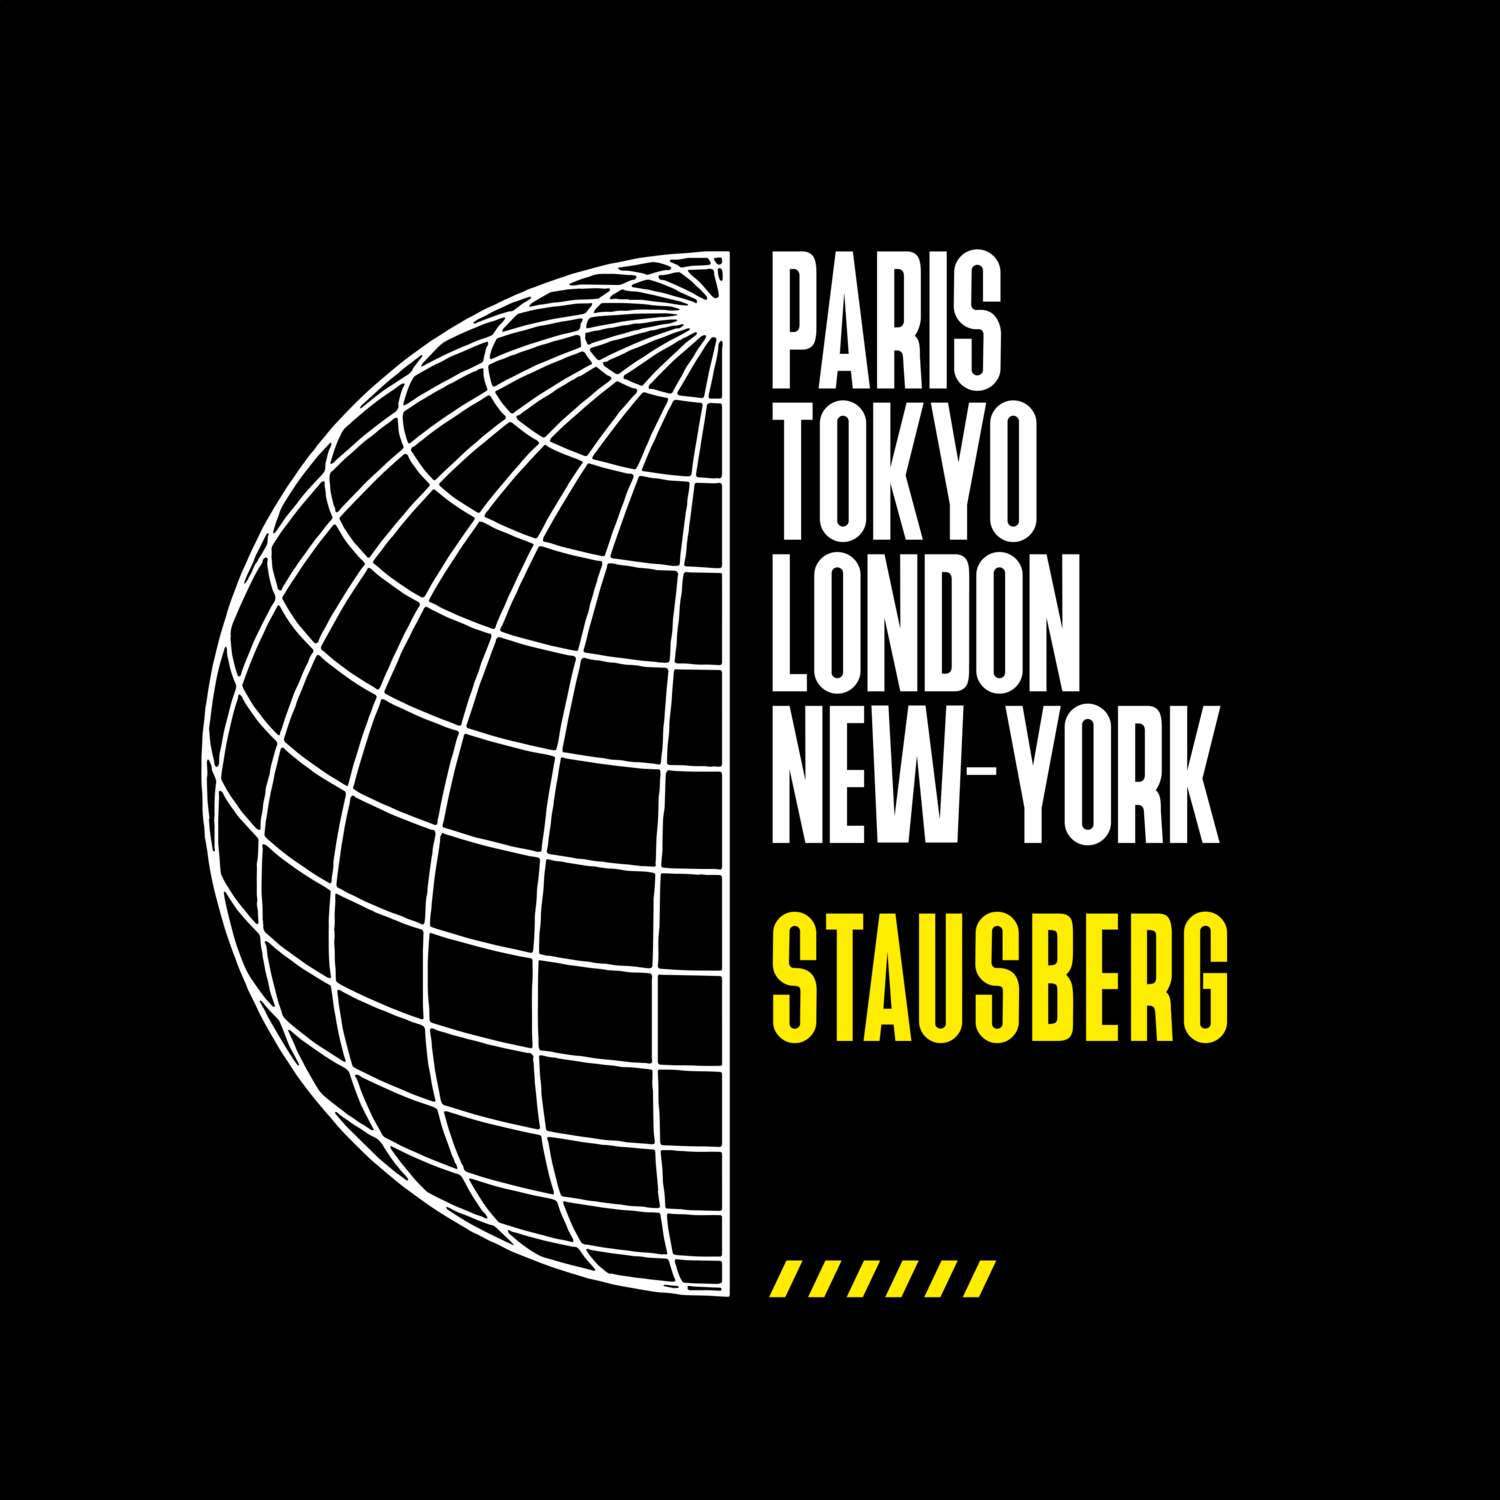 Stausberg T-Shirt »Paris Tokyo London«